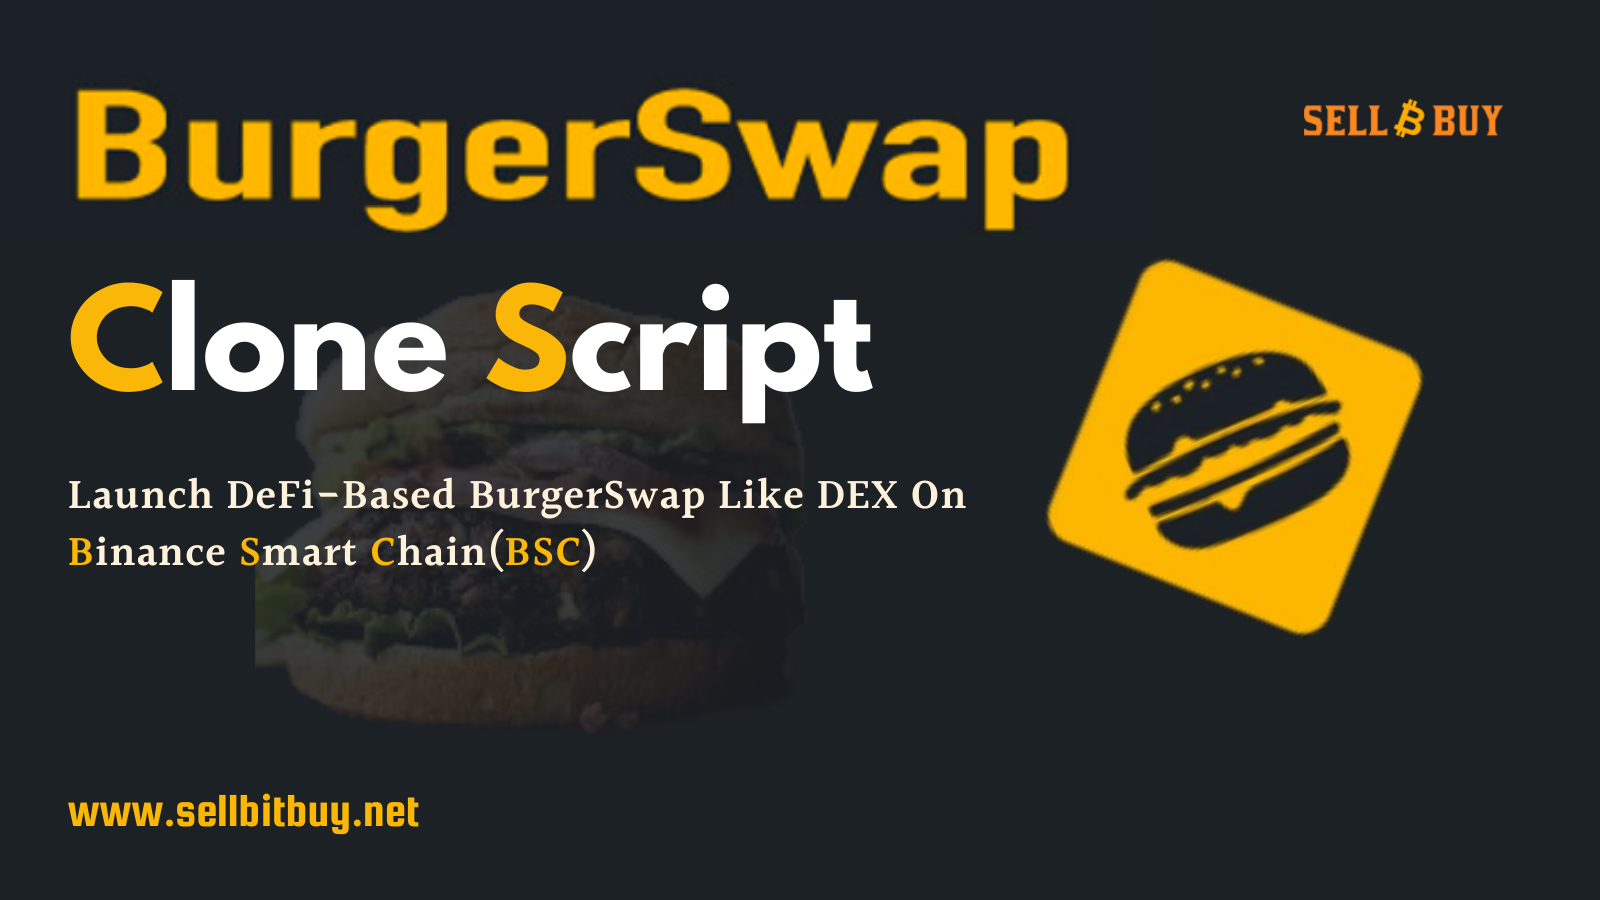 BurgerSwap Clone Script - Create DeFi DEX Like Burger Swap On Binance Smart Chain (BSC)